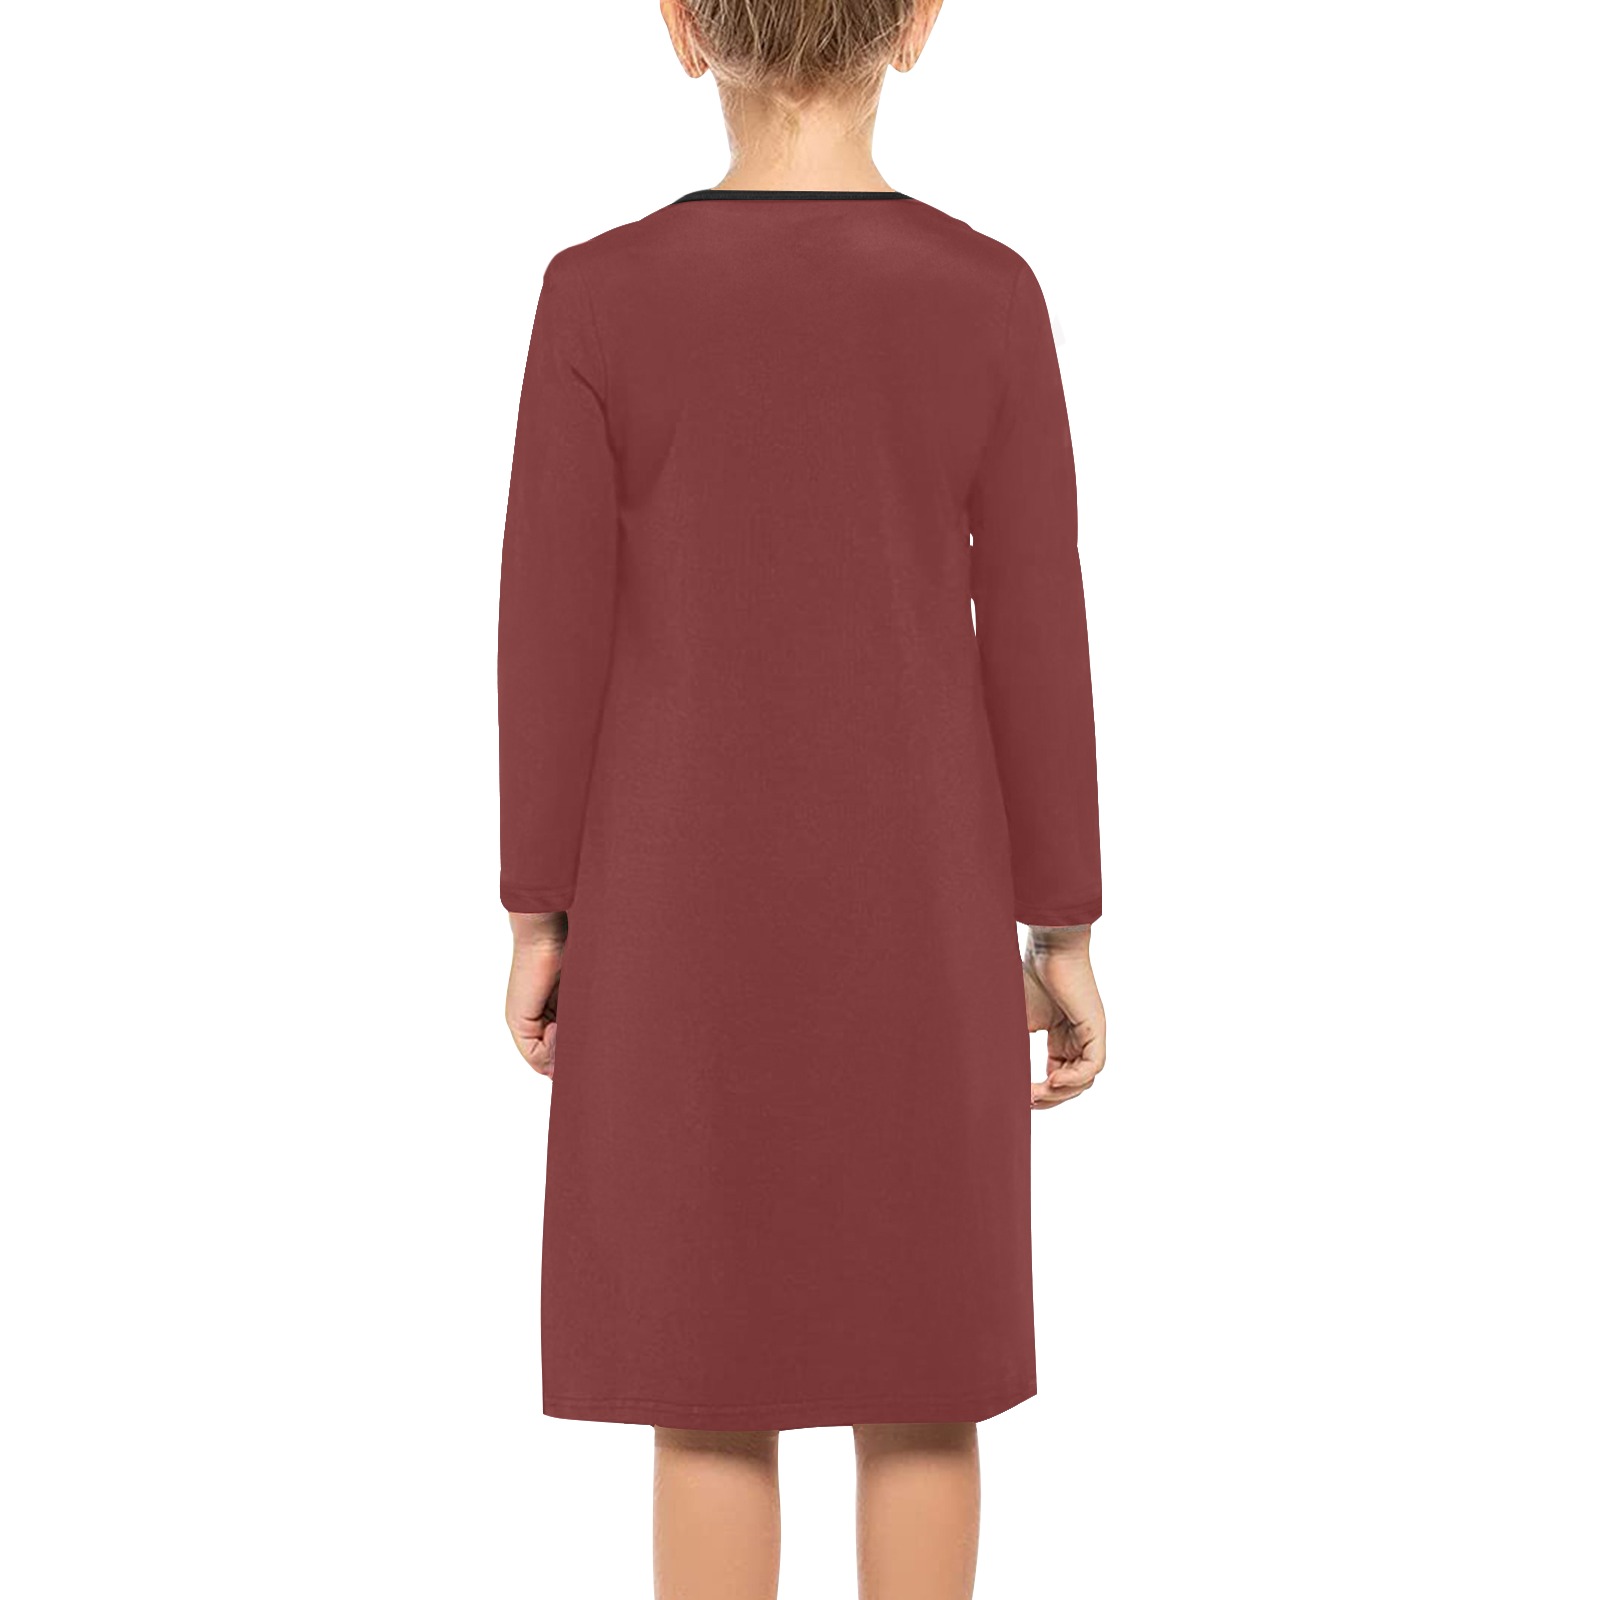 Foxy Roxy Burgundy Girls' Long Sleeve Dress (Model D59)